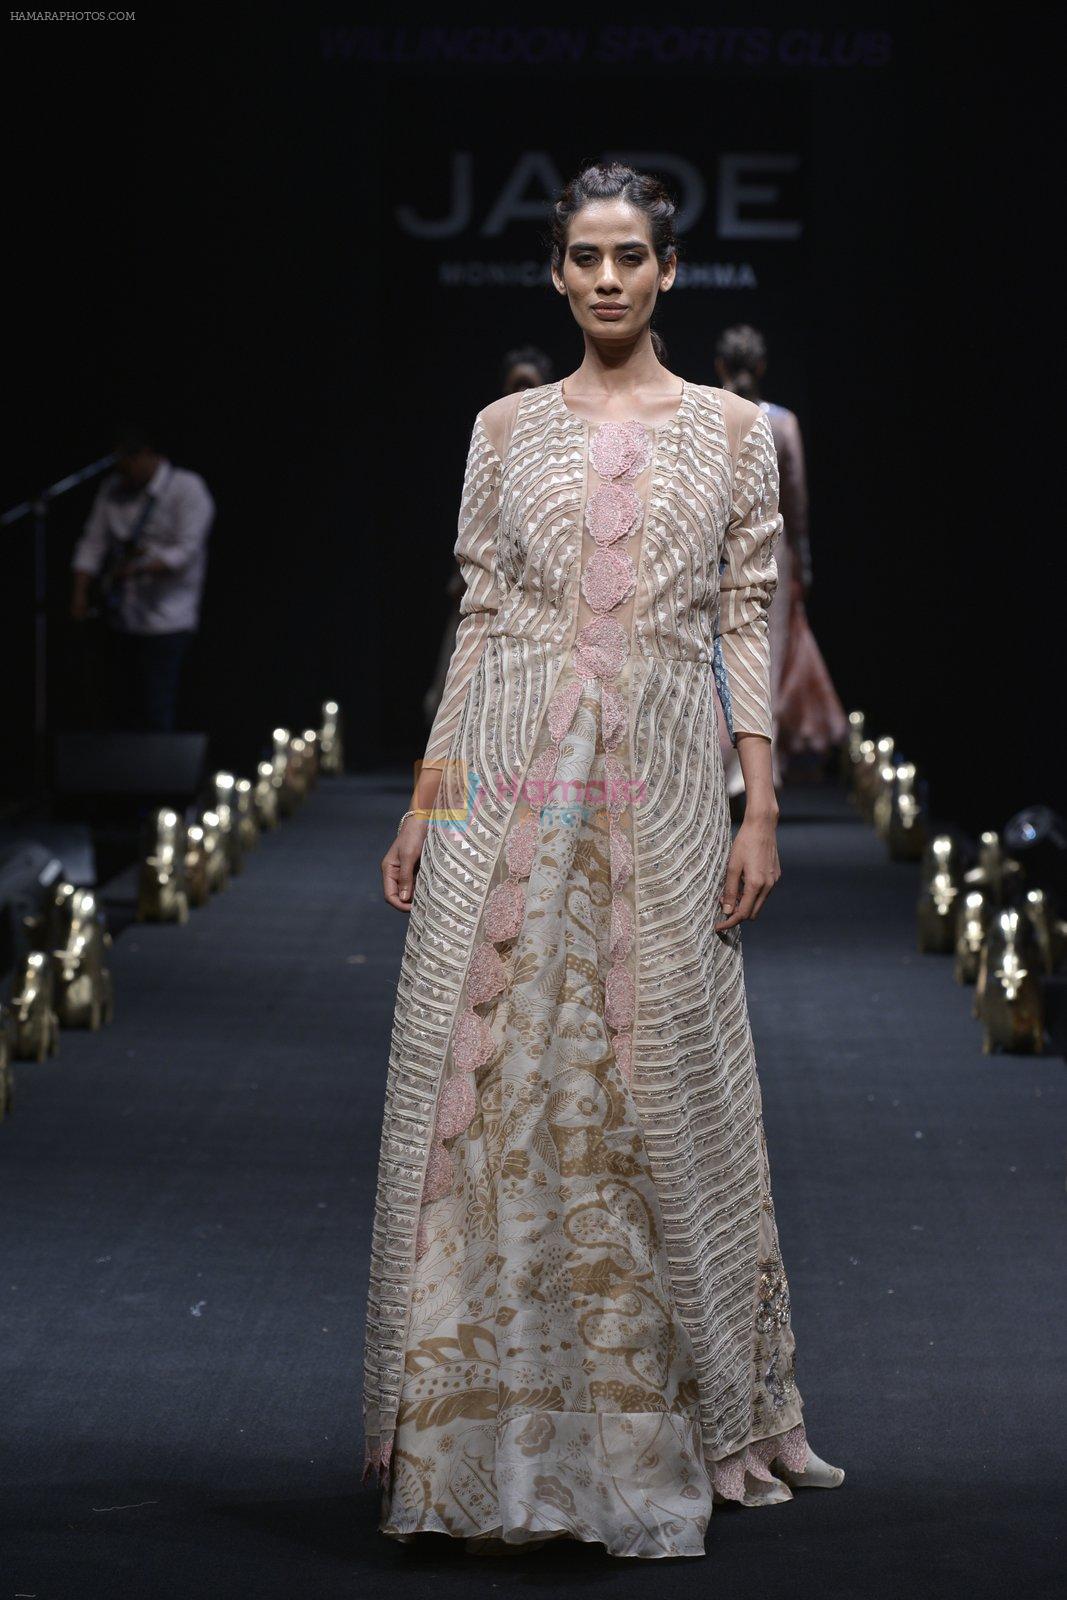 Model walks for Jade Fashion Show in Mumbai on 24th Feb 2016